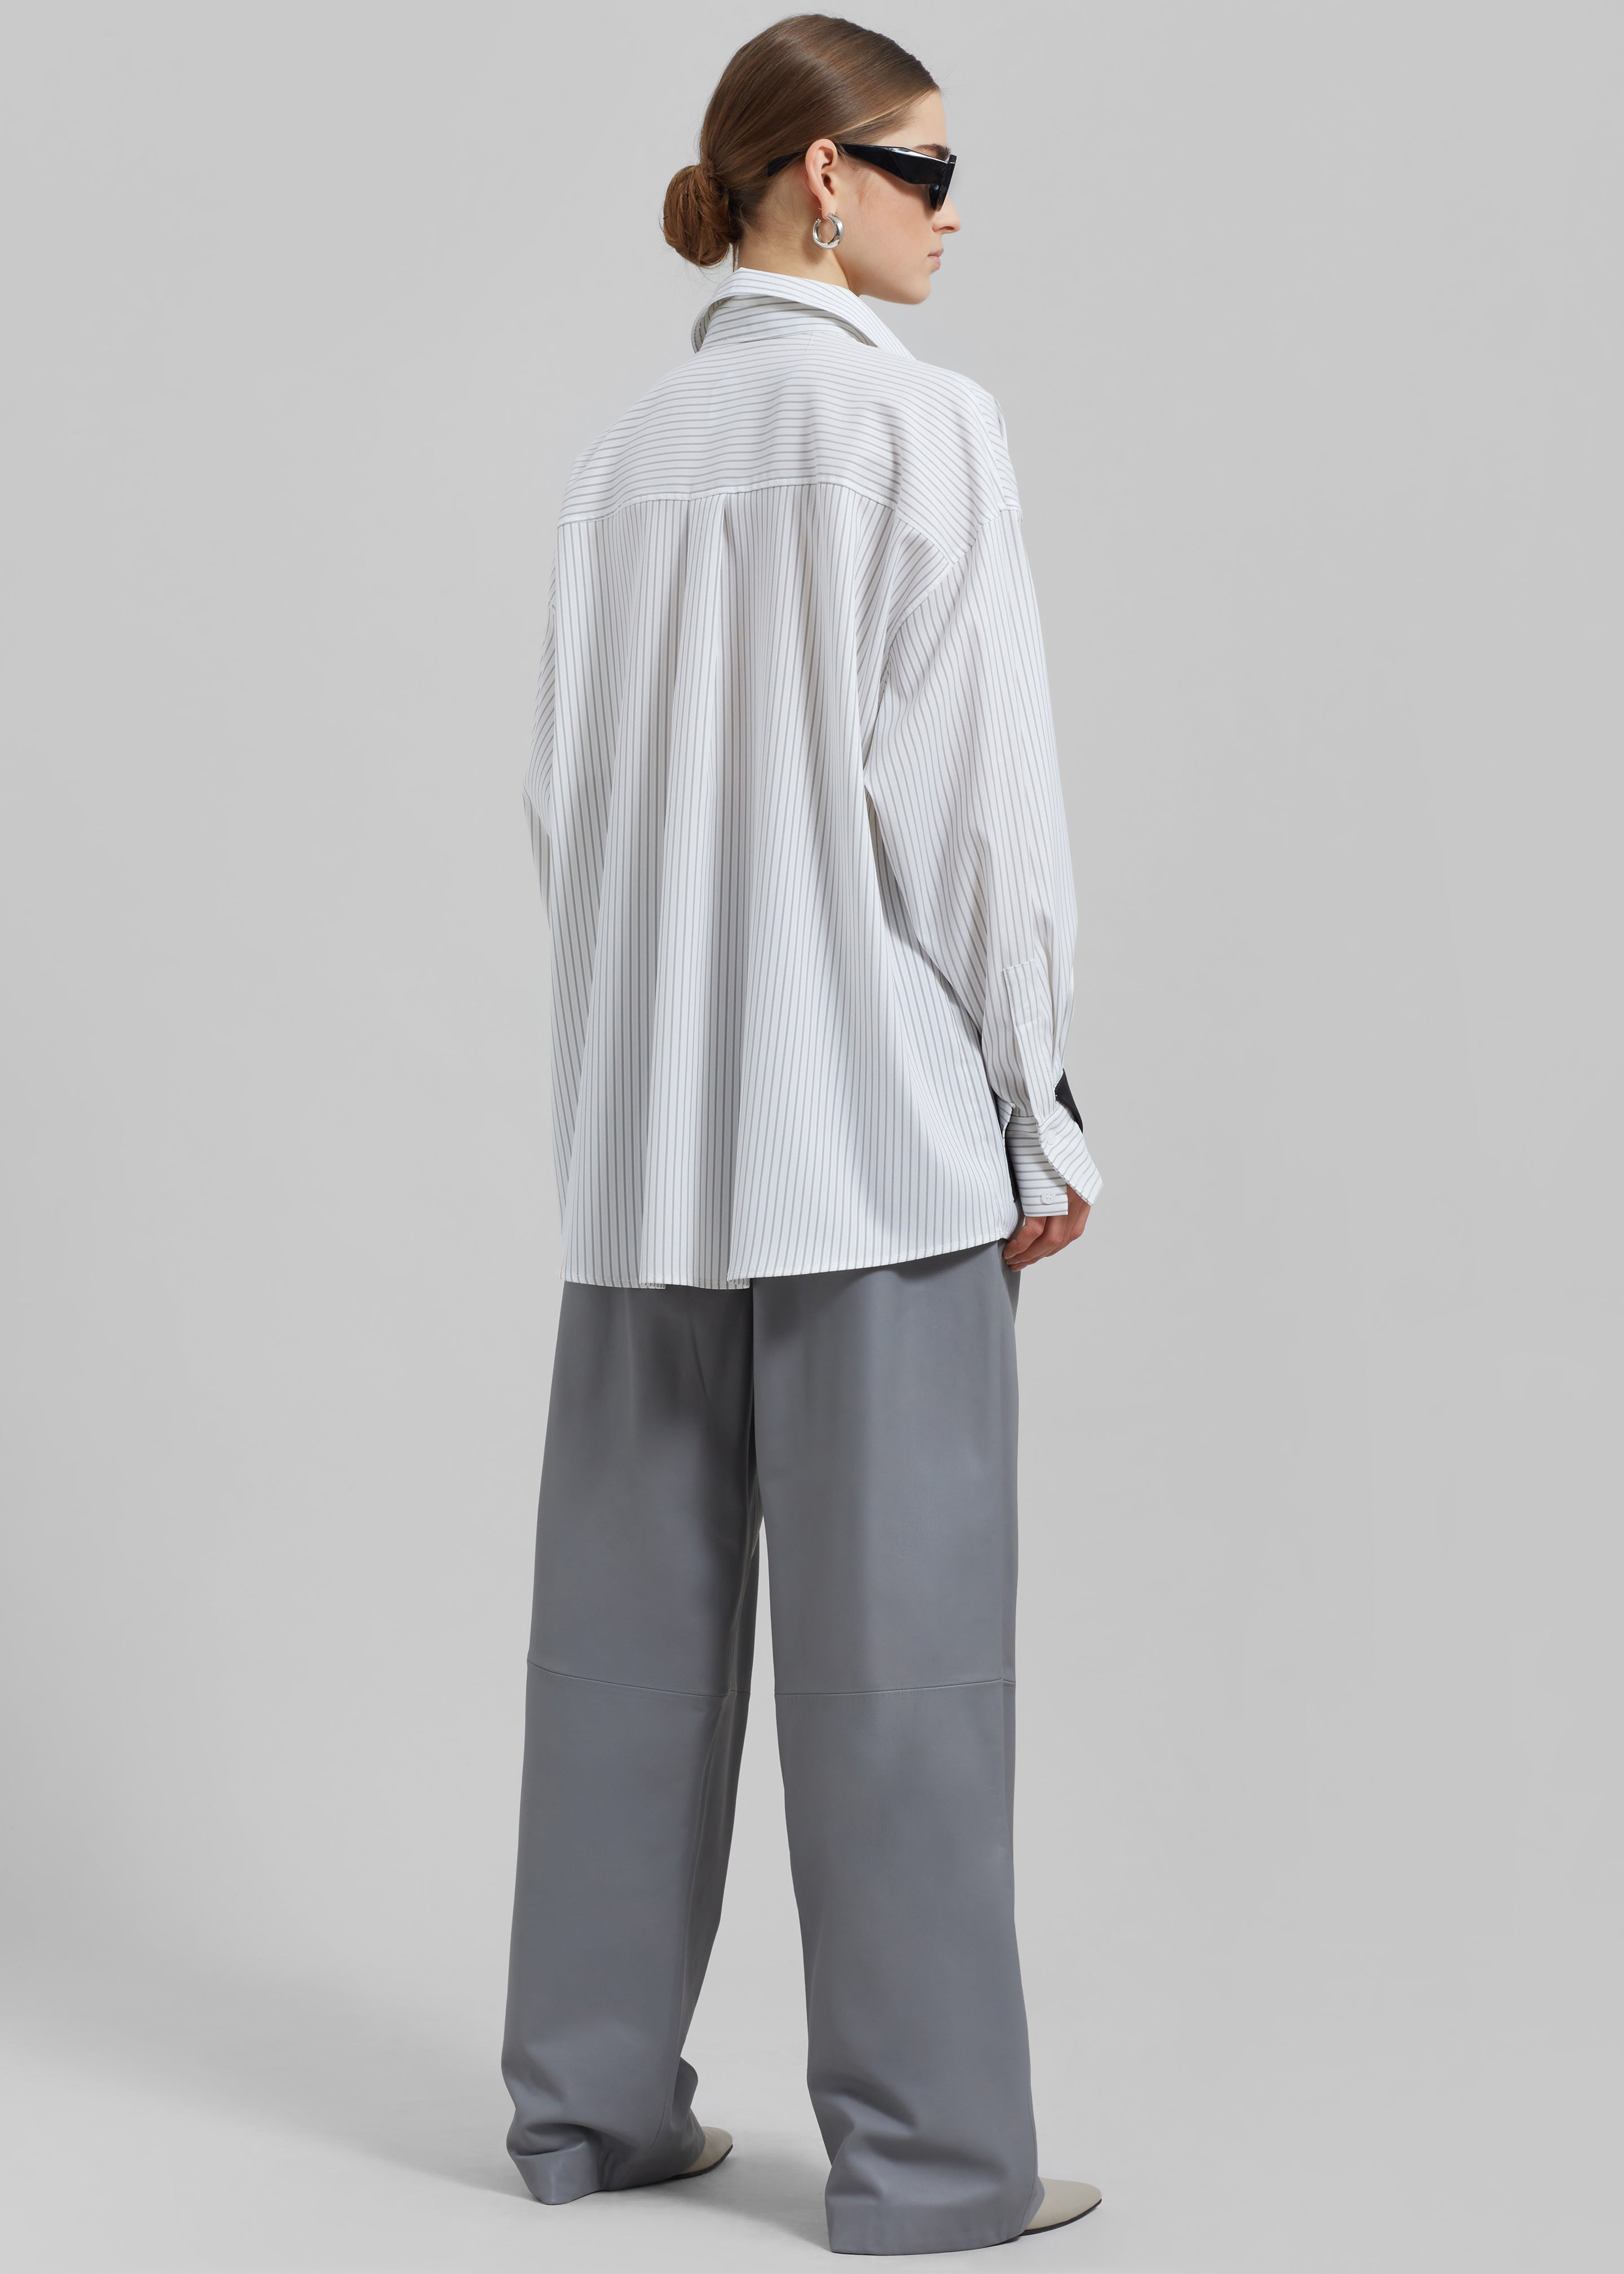 Leona Button Up Shirt - White/Grey Stripe - 8